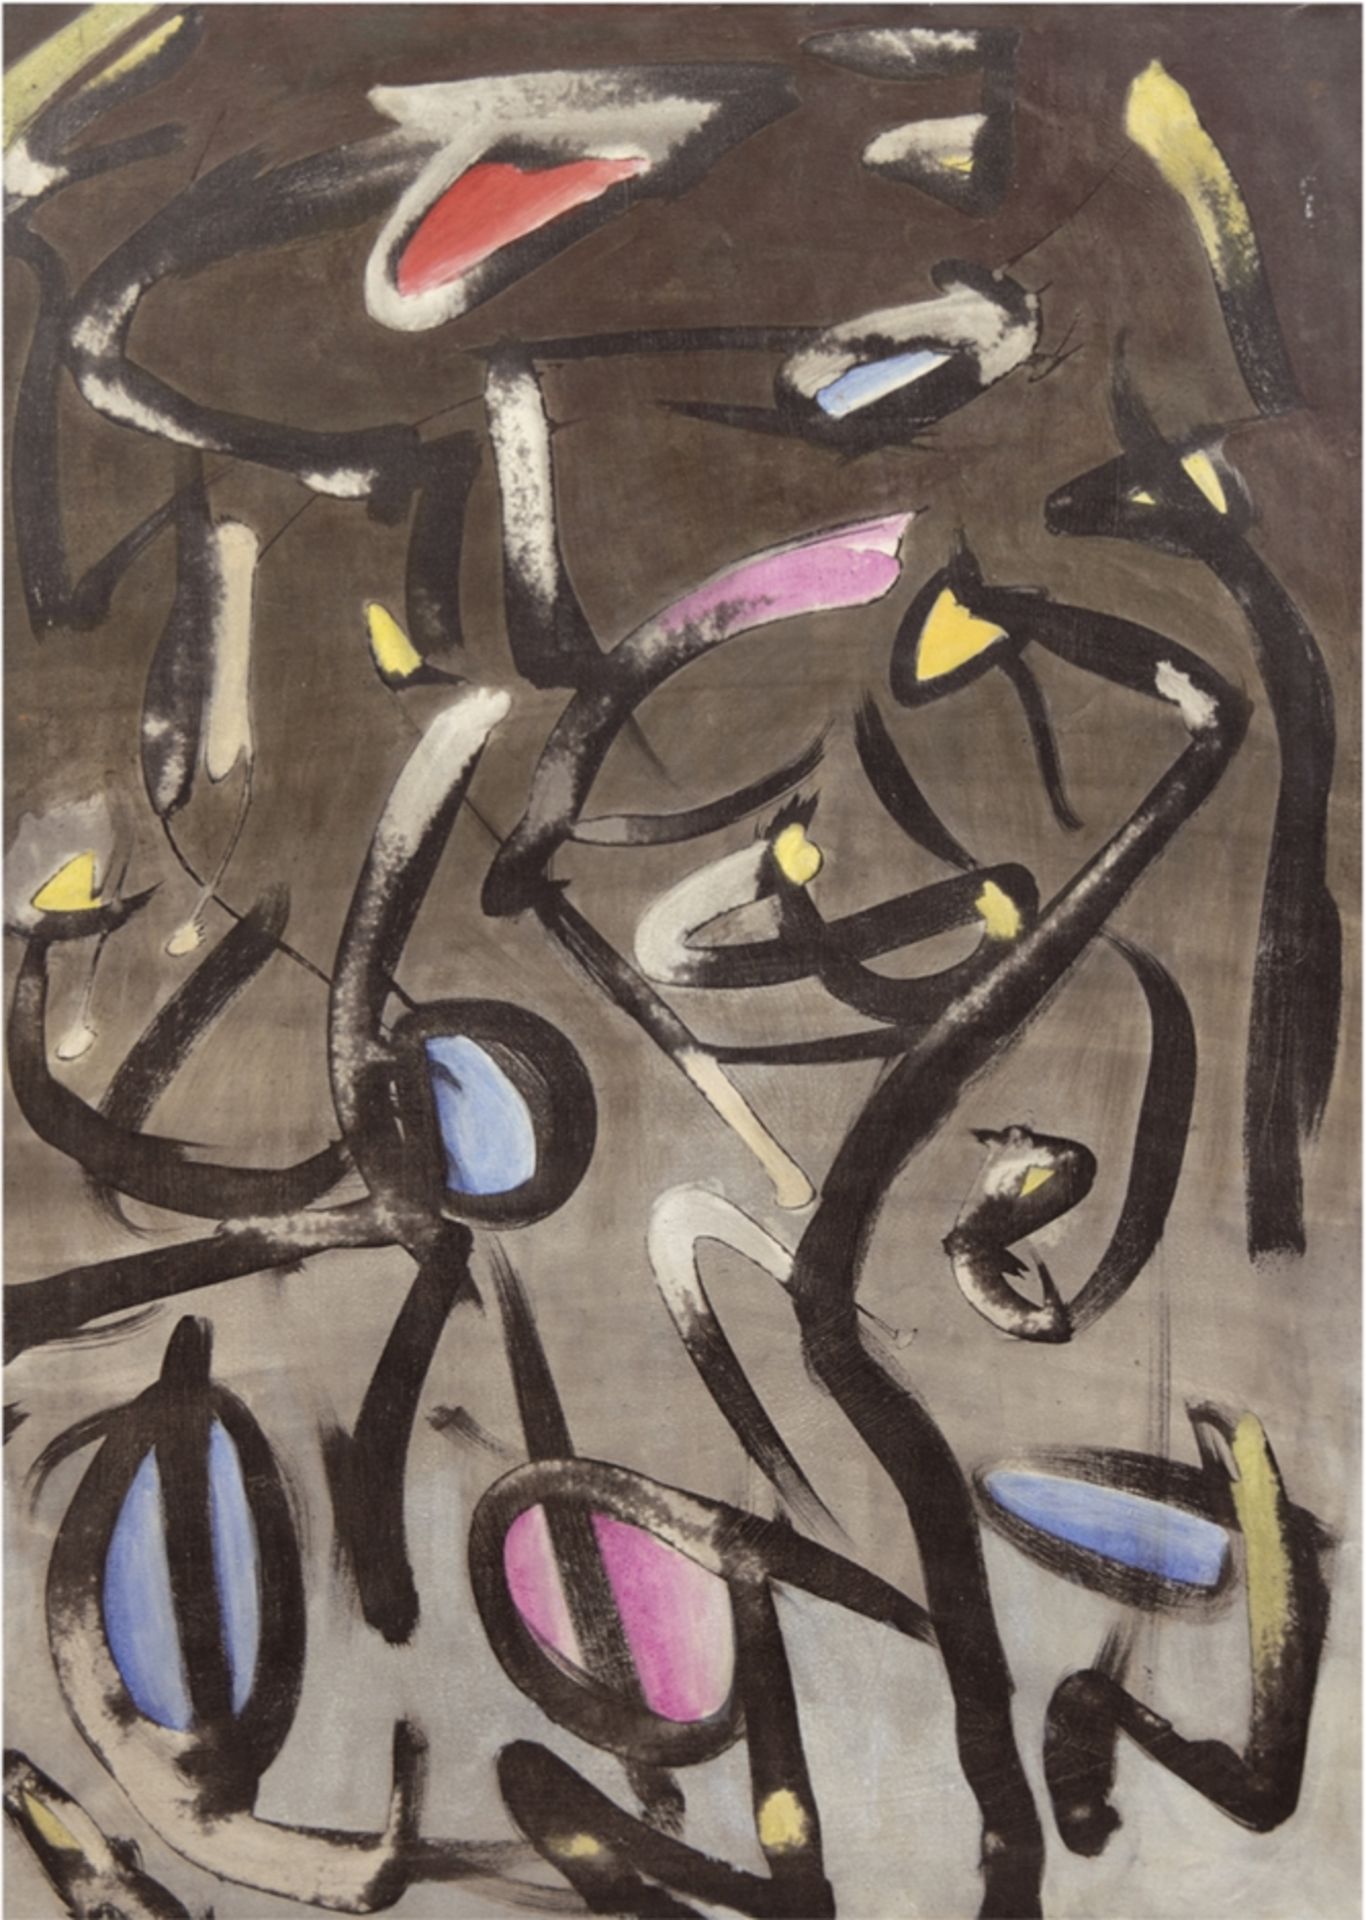 Blekking, Johannes Hendrik (1952) "Abstrakte Komposition", Öl/Lw., rücks. sign. u. dat. '85, 101x70